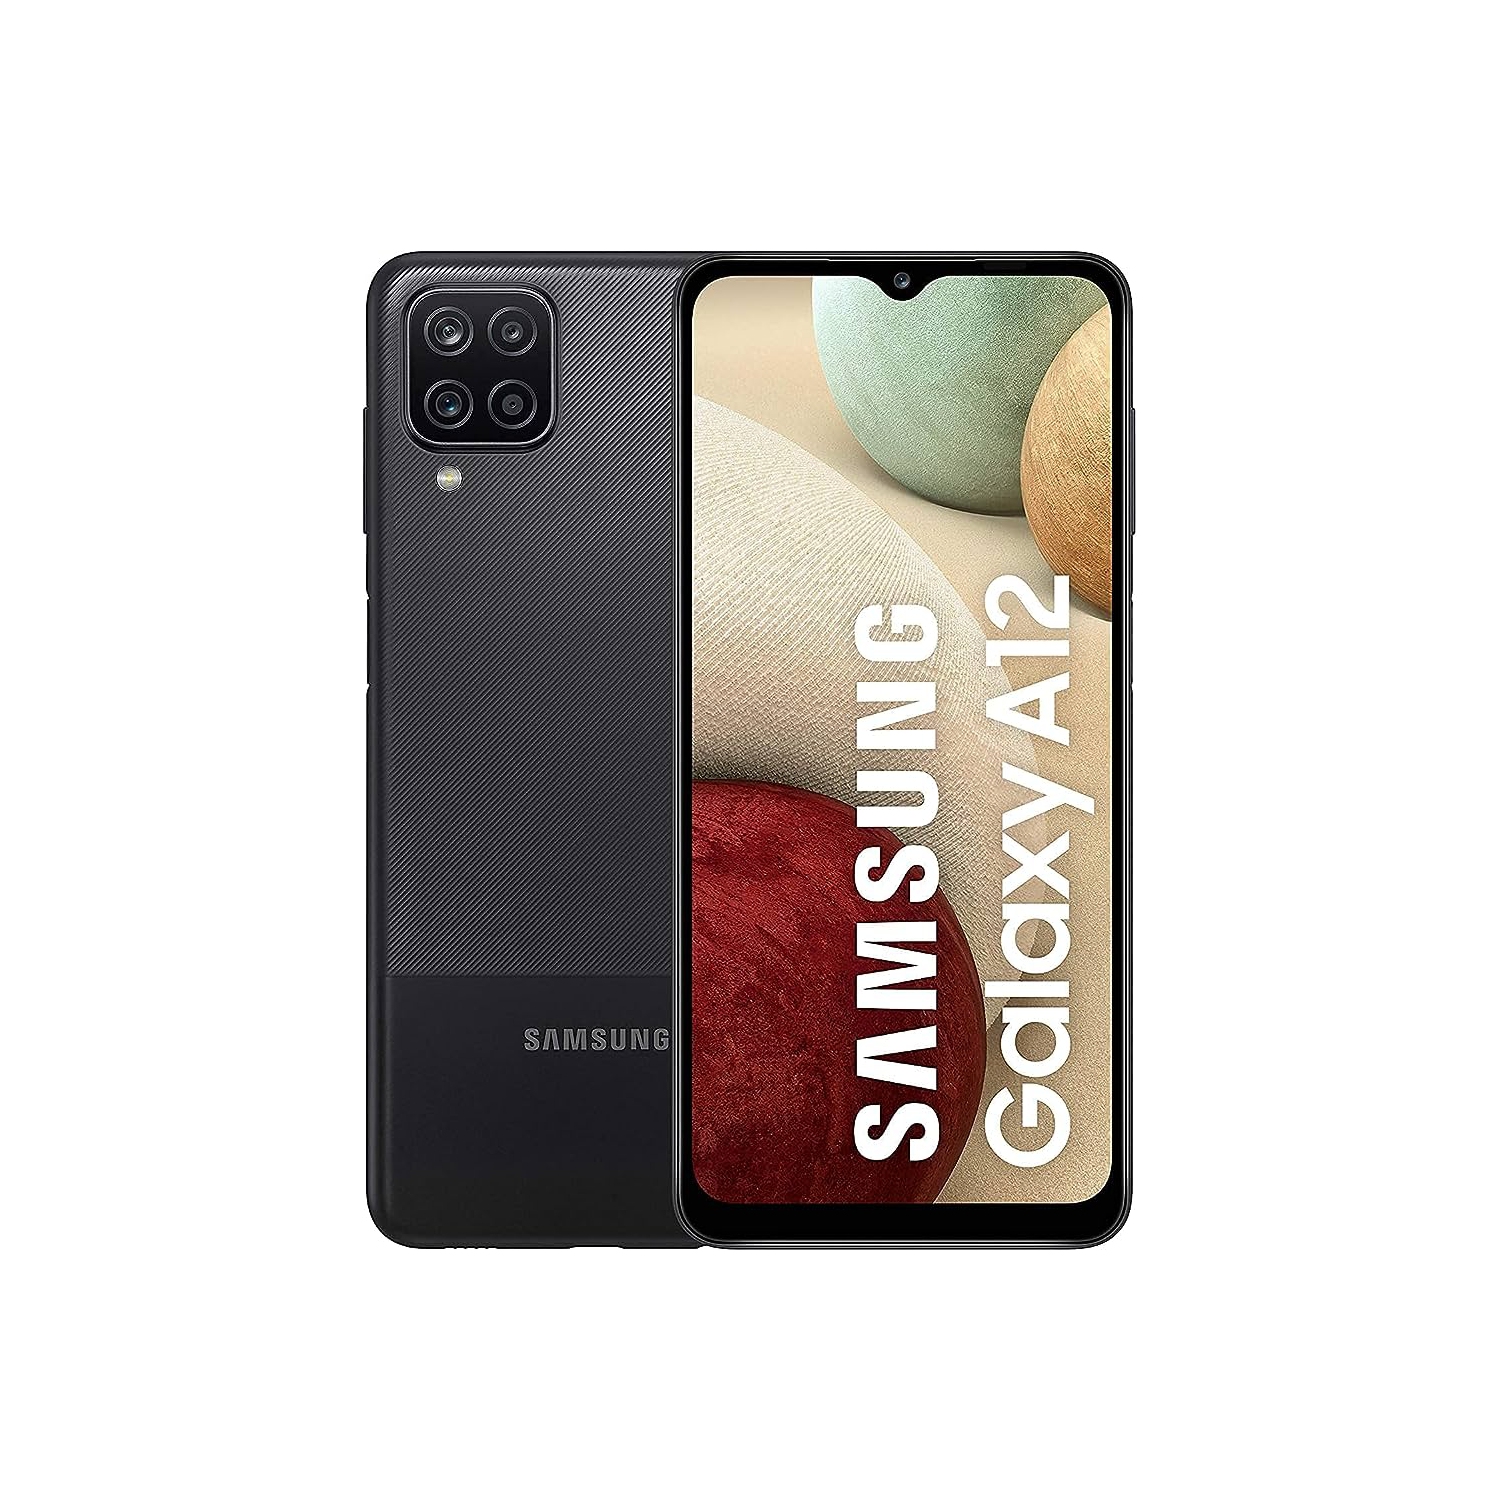 Refurbished (Excellent) - Samsung Galaxy A12 - 32GB - Black - Unlocked